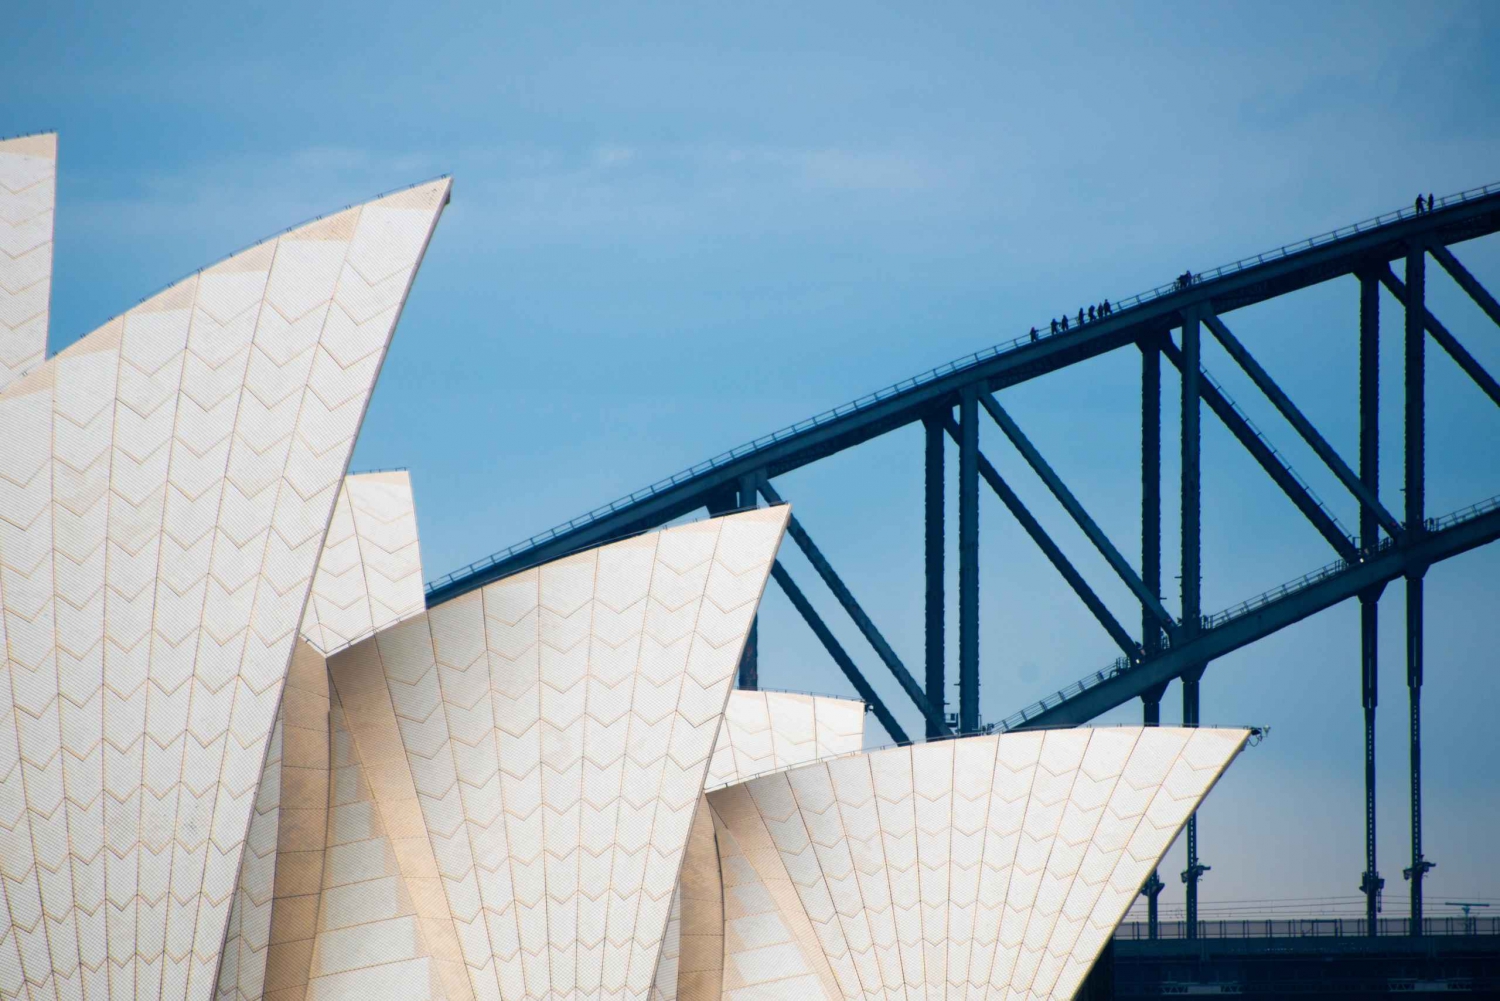 Sydney: Photography Shoot At Sydney Icons